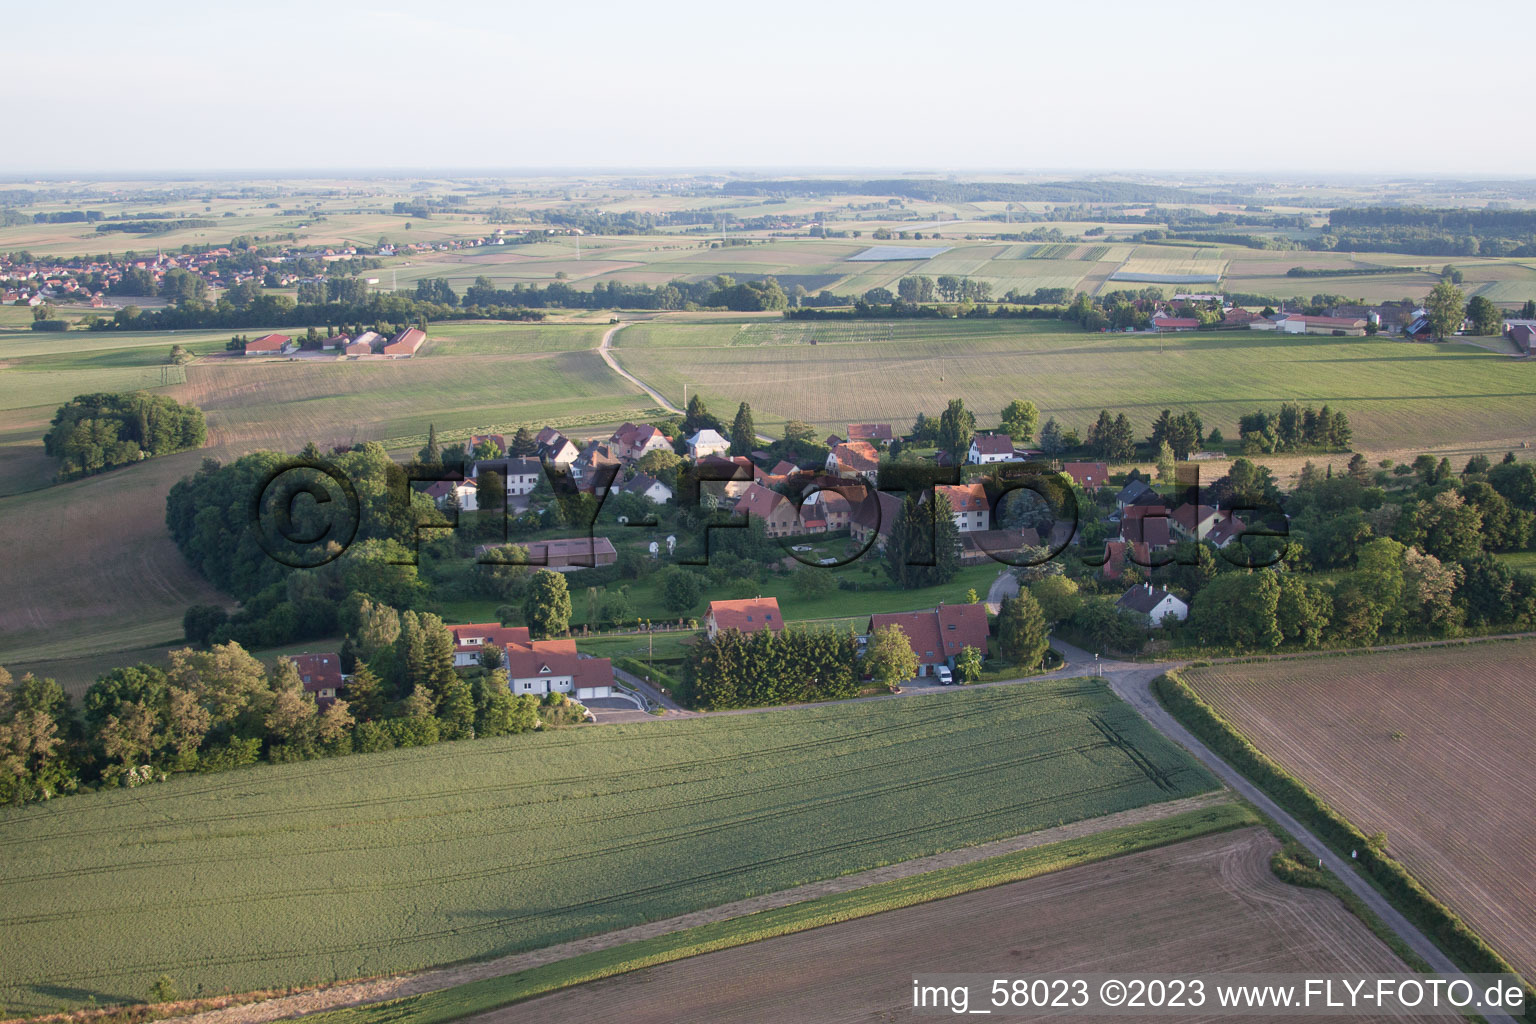 Geisberg in the state Bas-Rhin, France